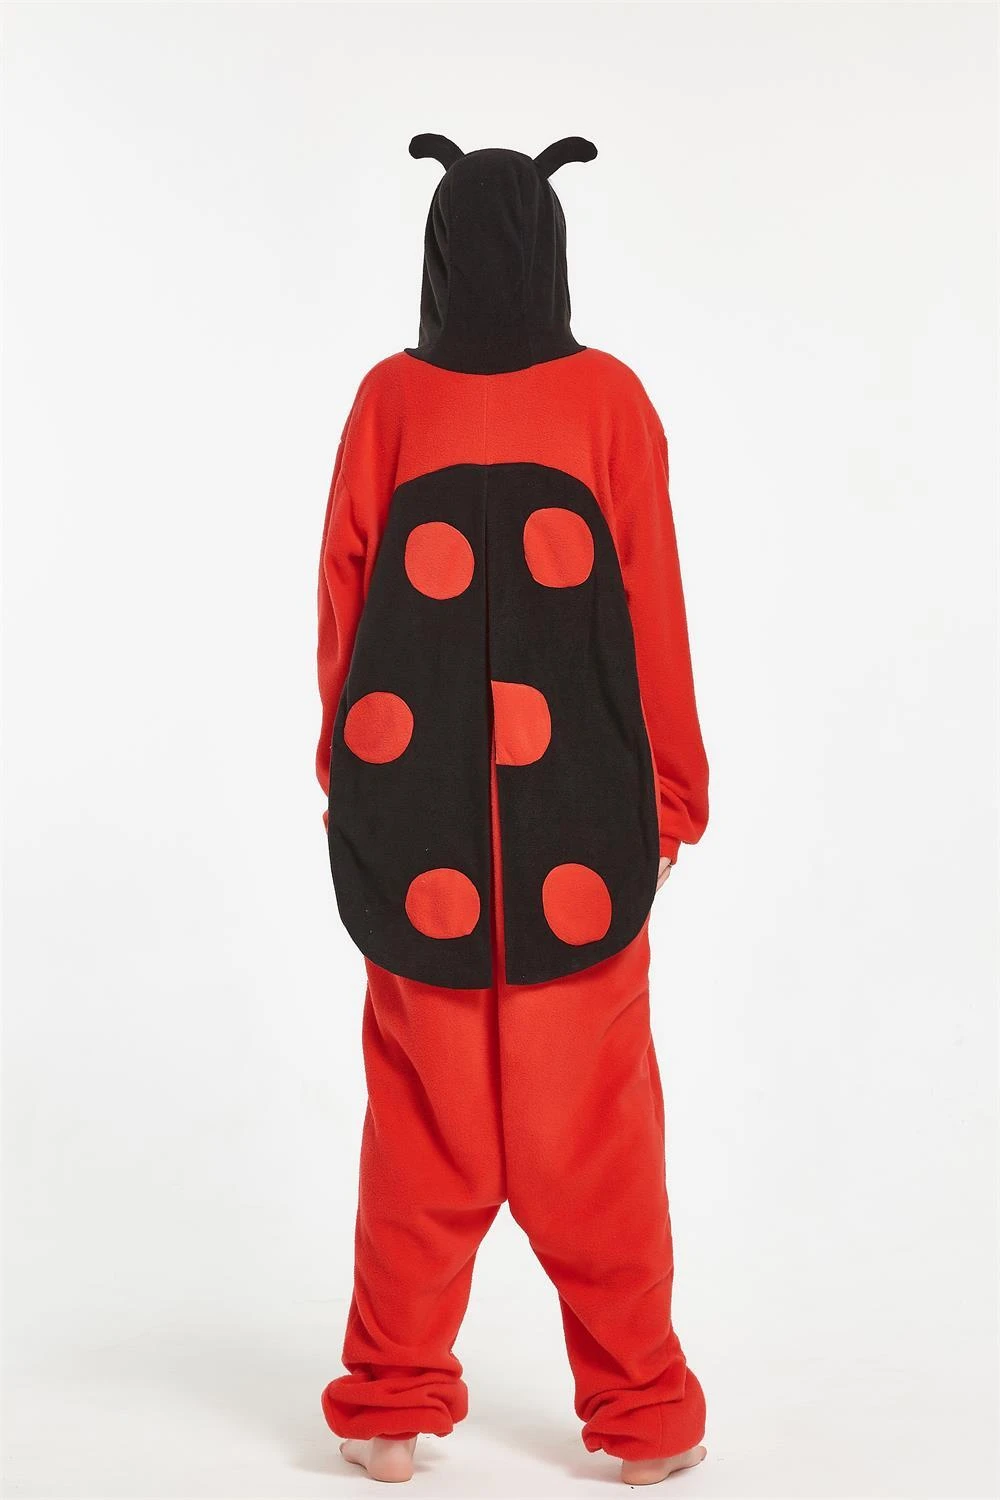 Ecology larynx wage Fantasias quentes pijama adulto ladybug unissex, para dia das bruxas, roupa  de dormir|party costume|costume halloweenadult ladybug halloween costume -  AliExpress